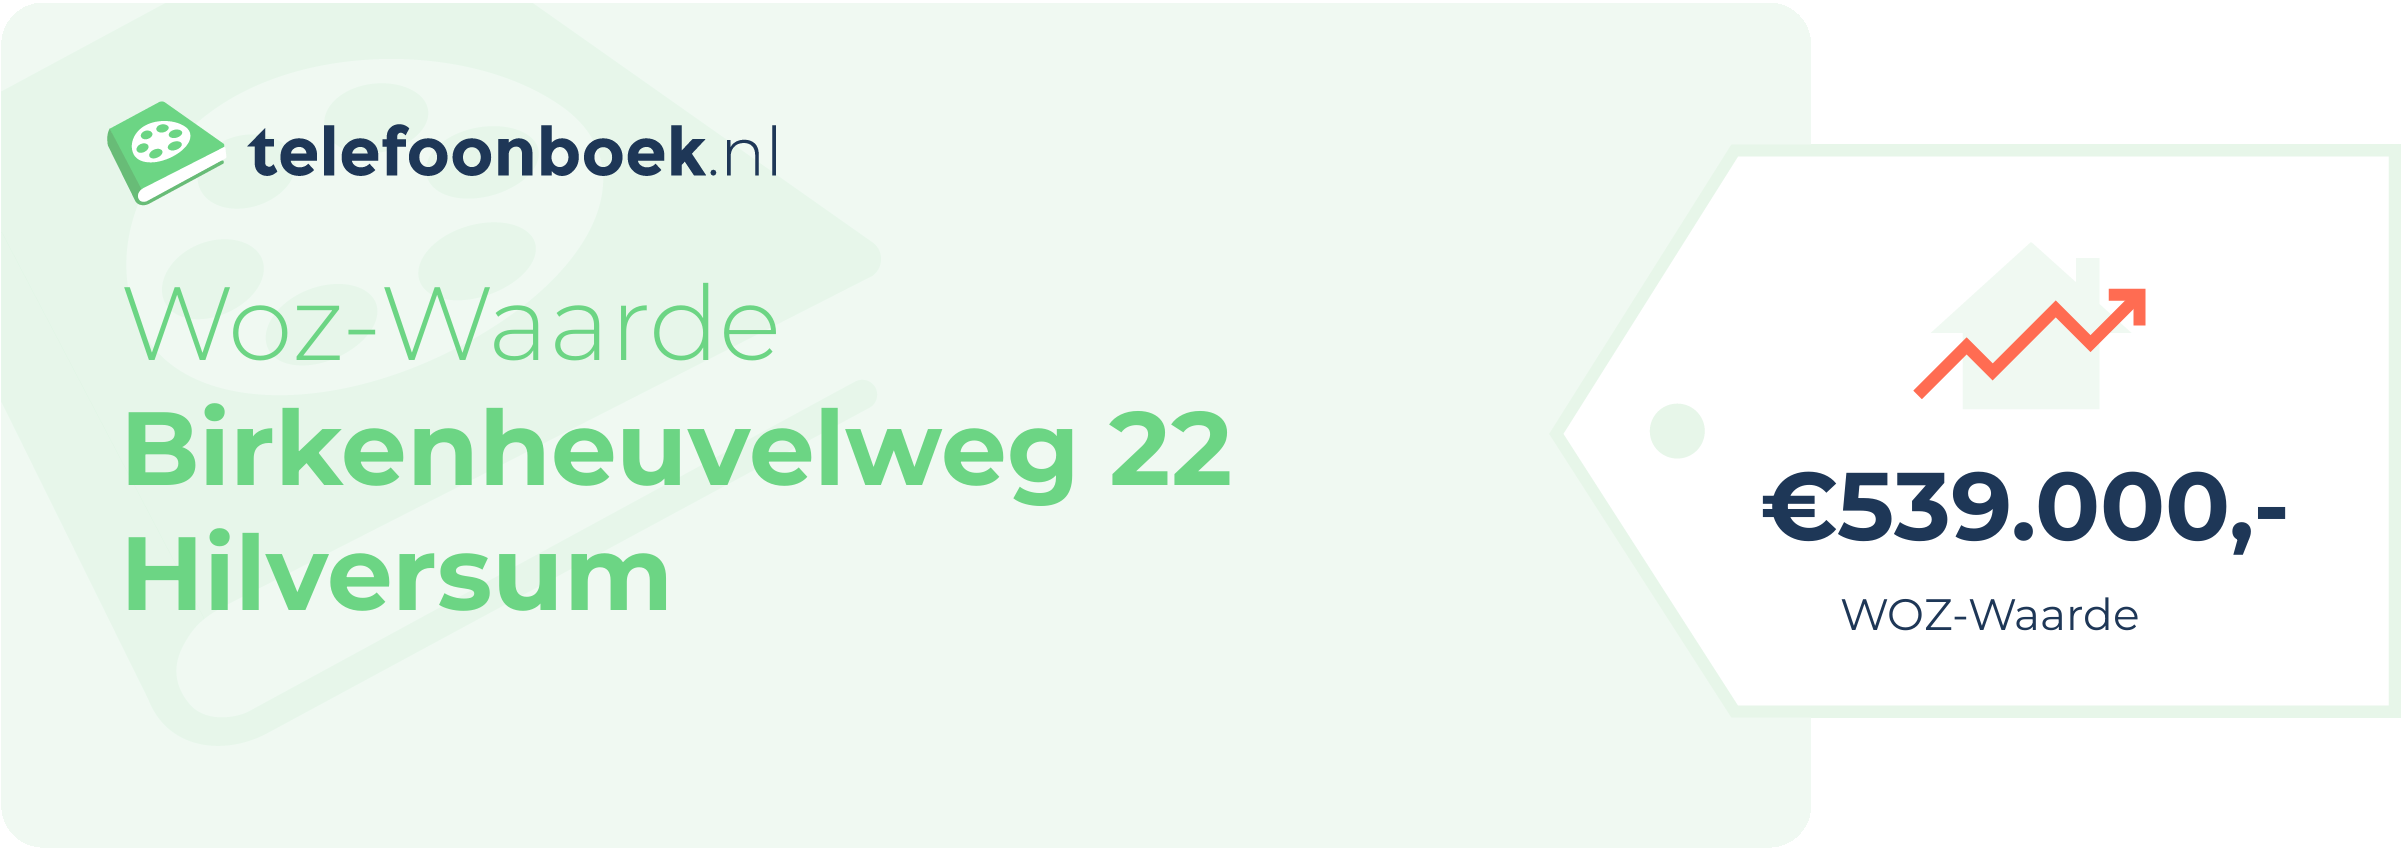 WOZ-waarde Birkenheuvelweg 22 Hilversum